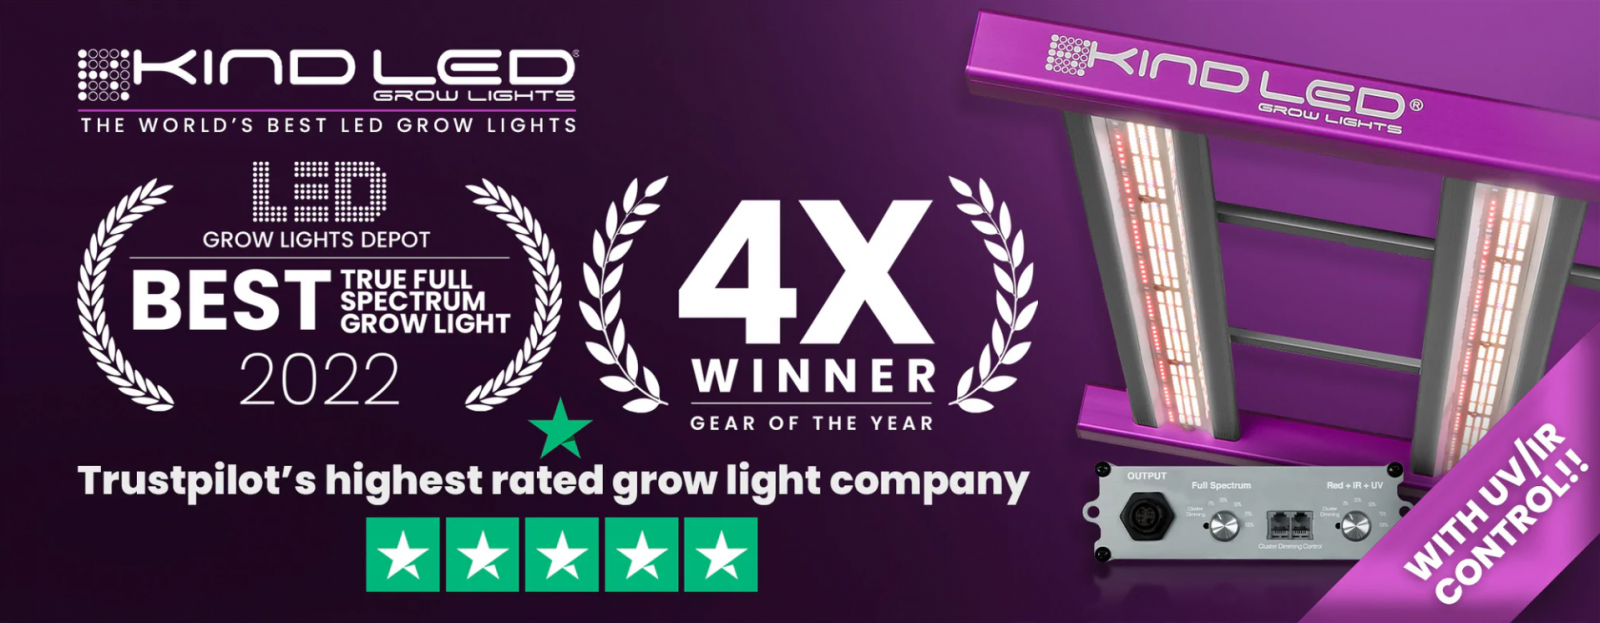 led-grow-lights-depot-referral